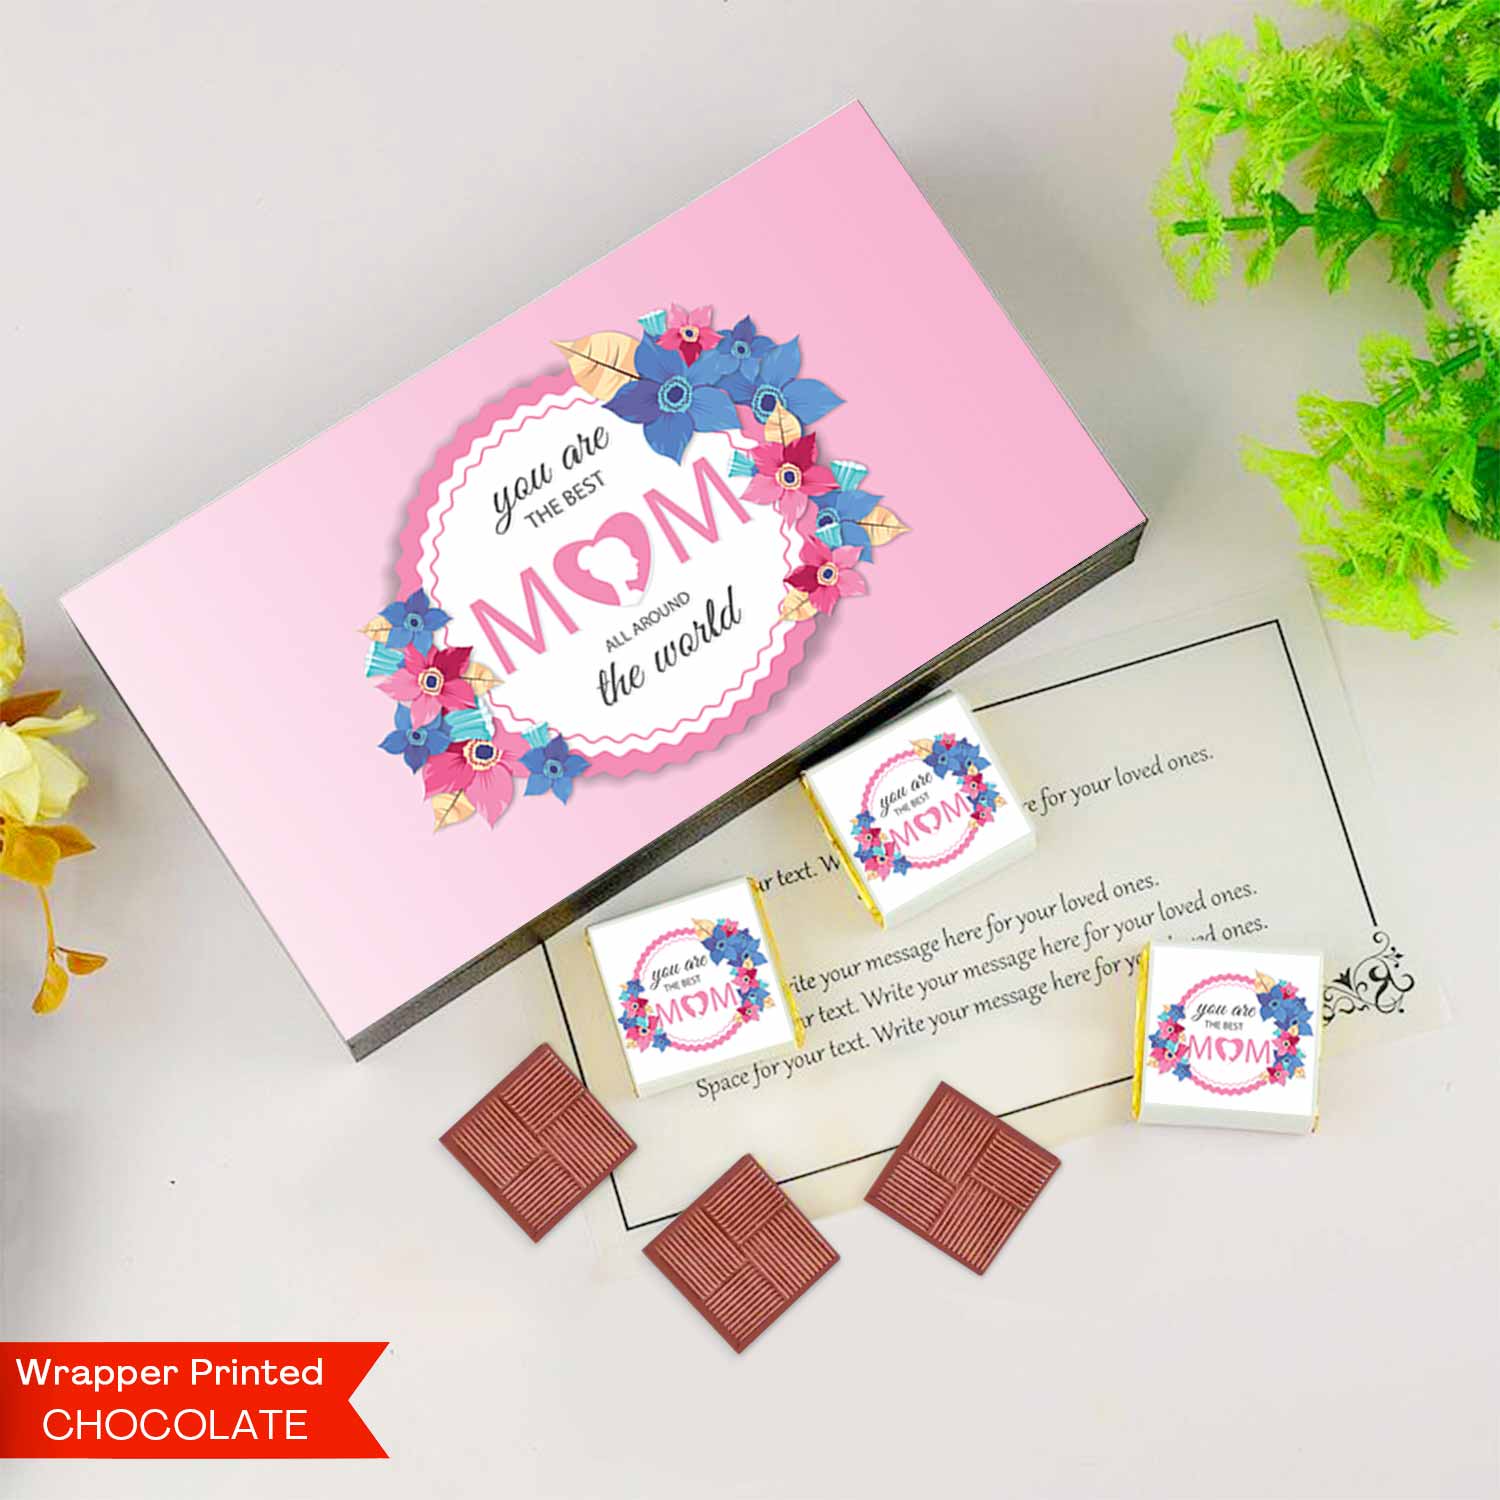 Customised Chocolates with dazzling printed box